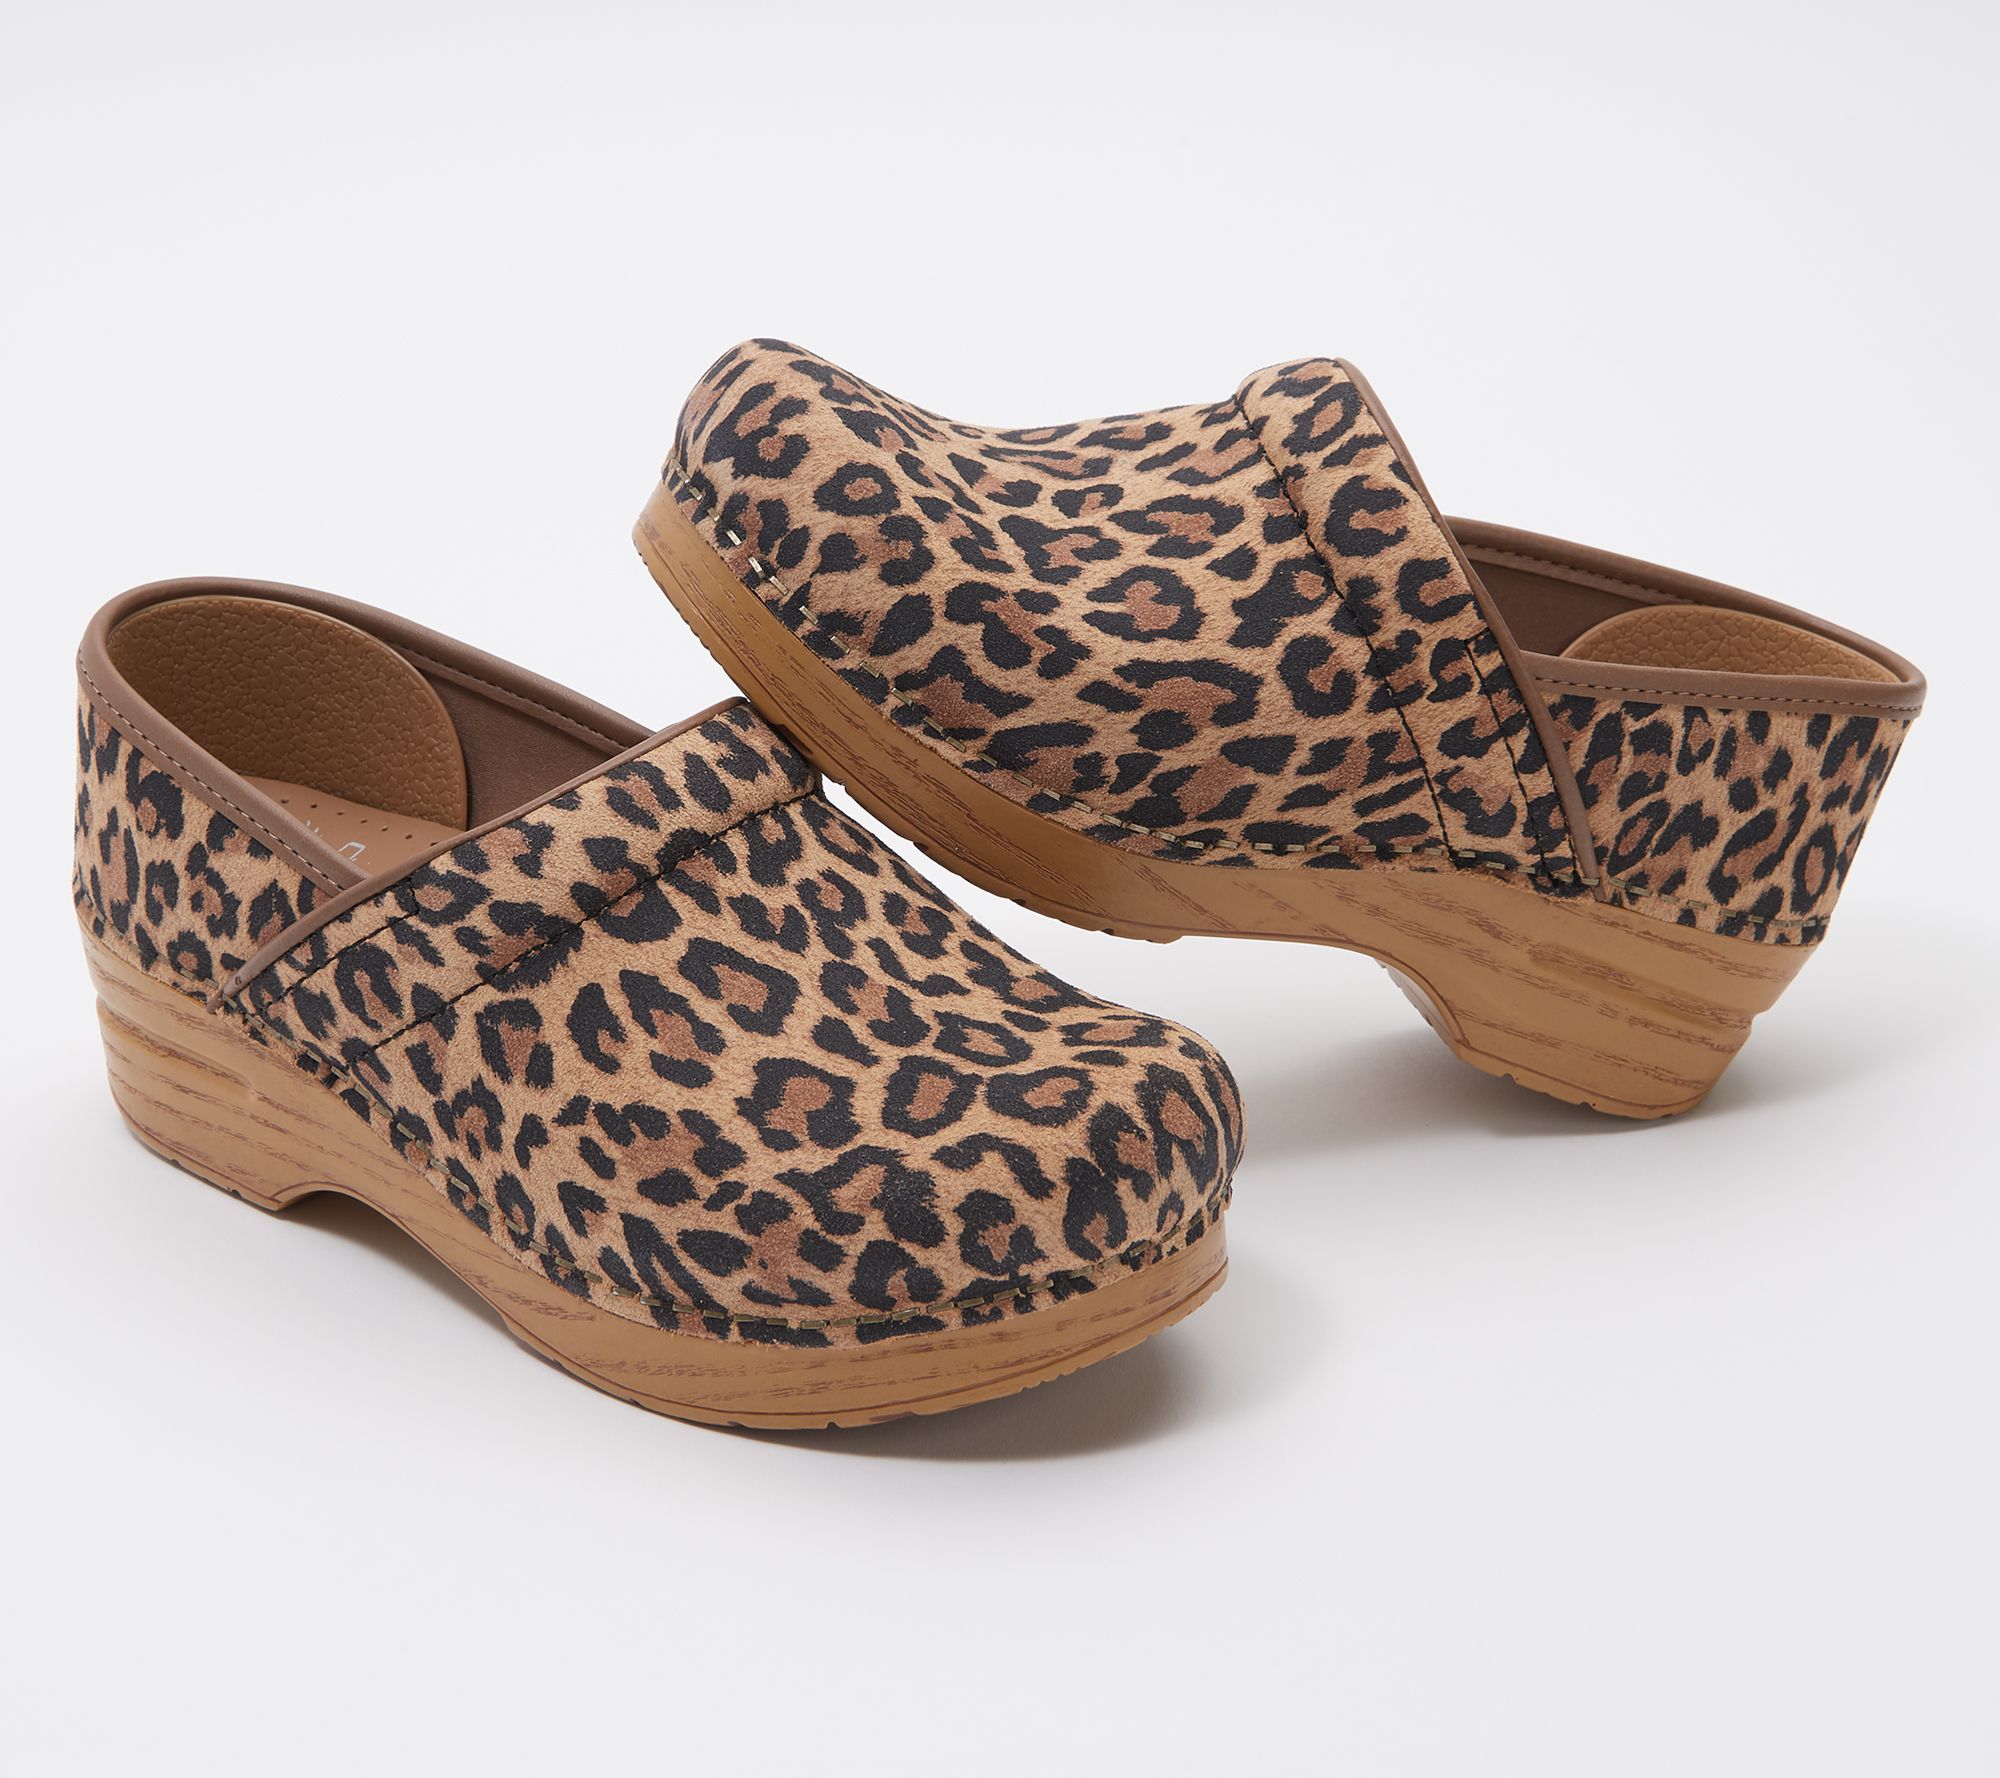 dansko leopard clogs